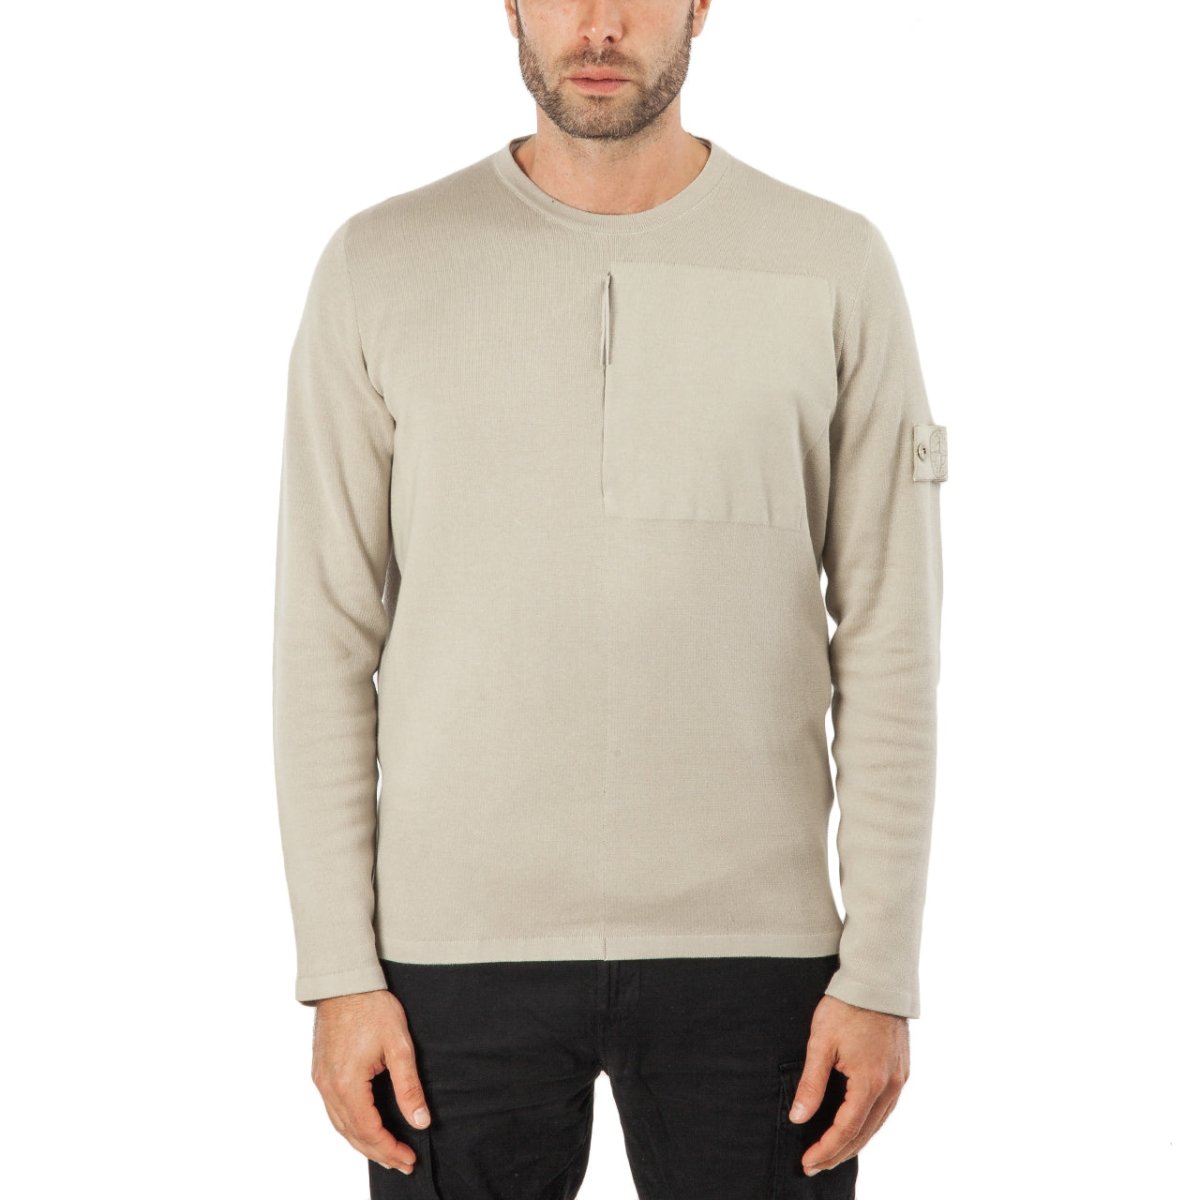 Stone Island Ghost Sweater (Beige)  - Allike Store